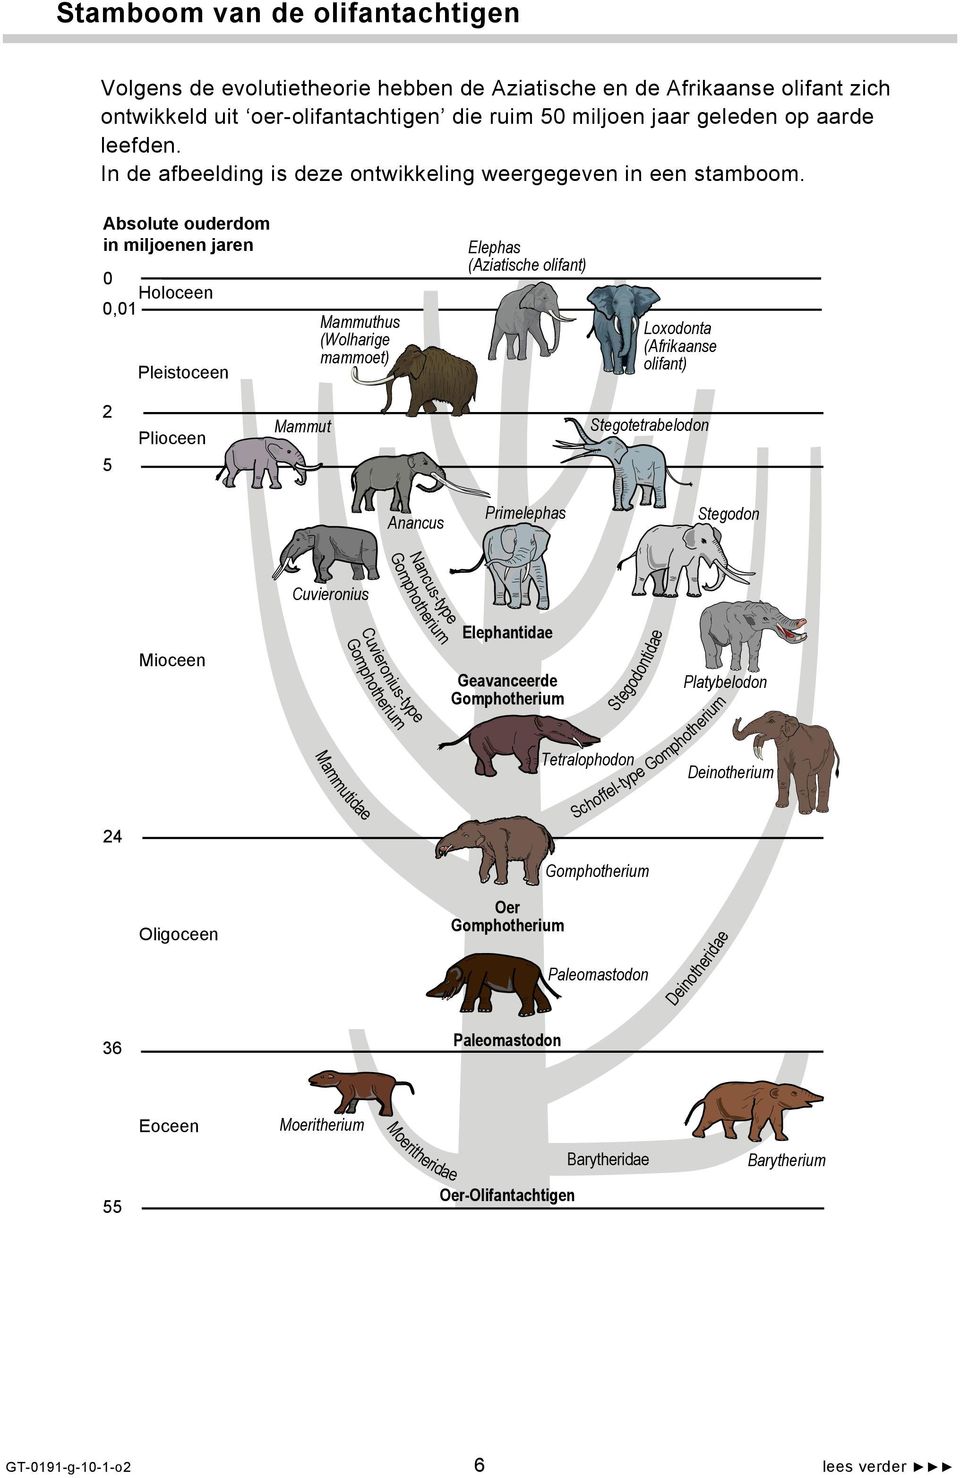 Absolute ouderdom in miljoenen jaren 0 Holoceen 0,01 Pleistoceen Mammuthus (Wolharige mammoet) Elephas (Aziatische olifant) Loxodonta (Afrikaanse olifant) 2 5 Plioceen Mammut Stegotetrabelodon